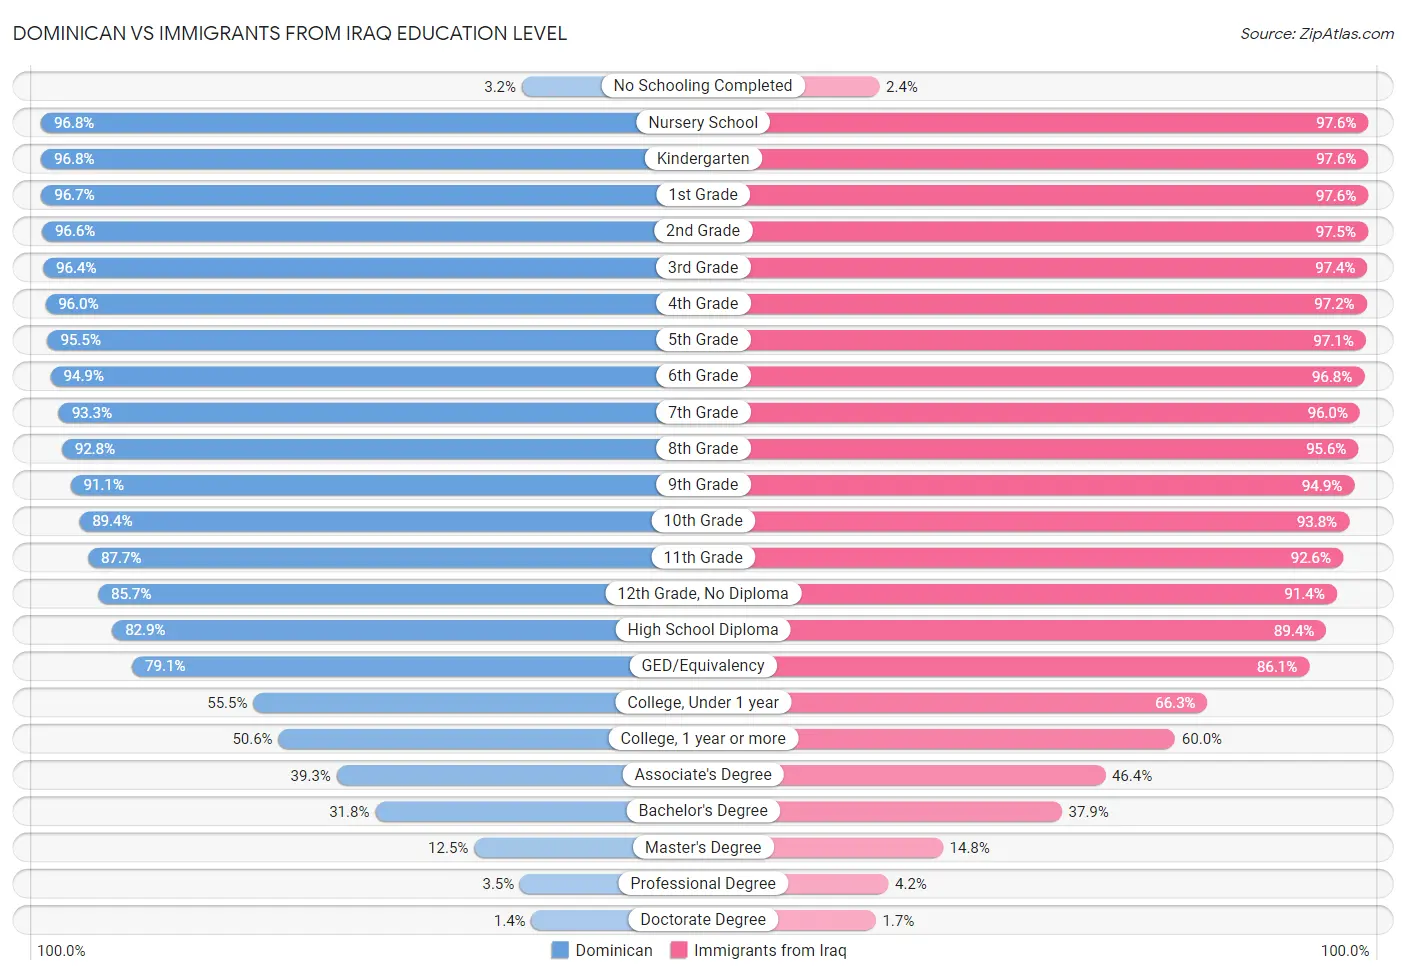 Dominican vs Immigrants from Iraq Education Level